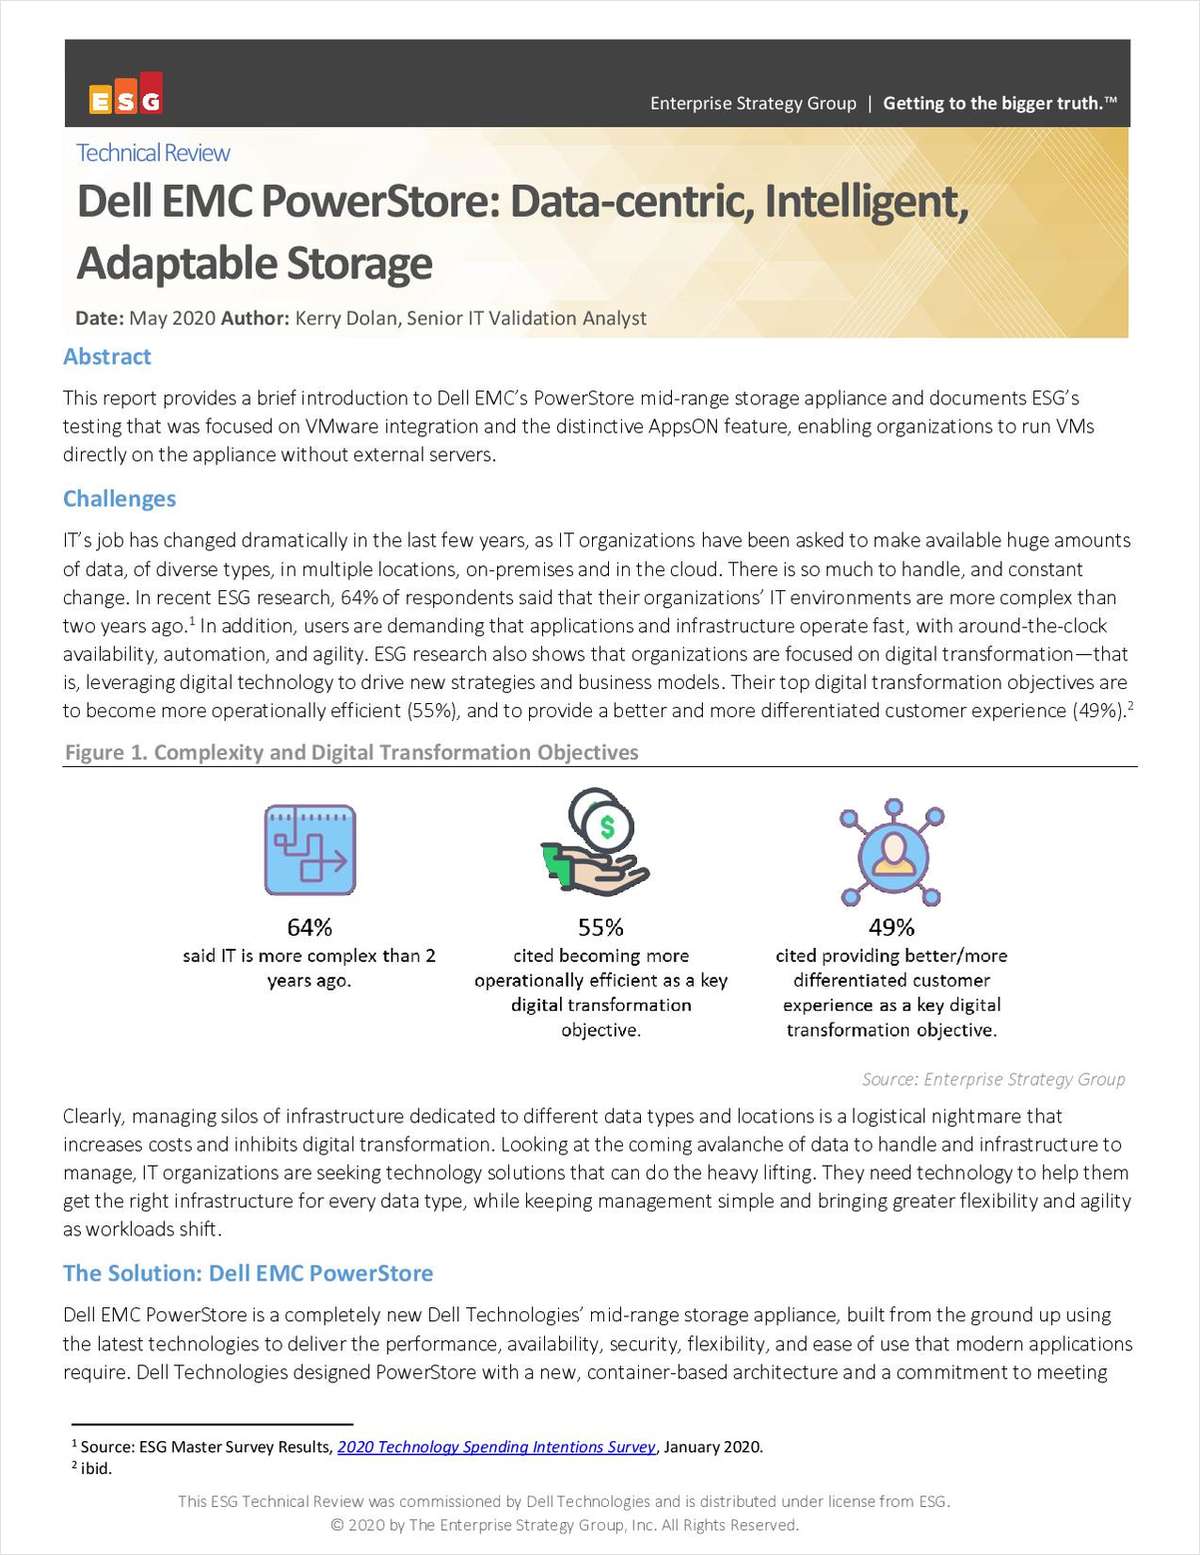 Dell EMC PowerStore: Data-centric, Intelligent, Adaptable Storage